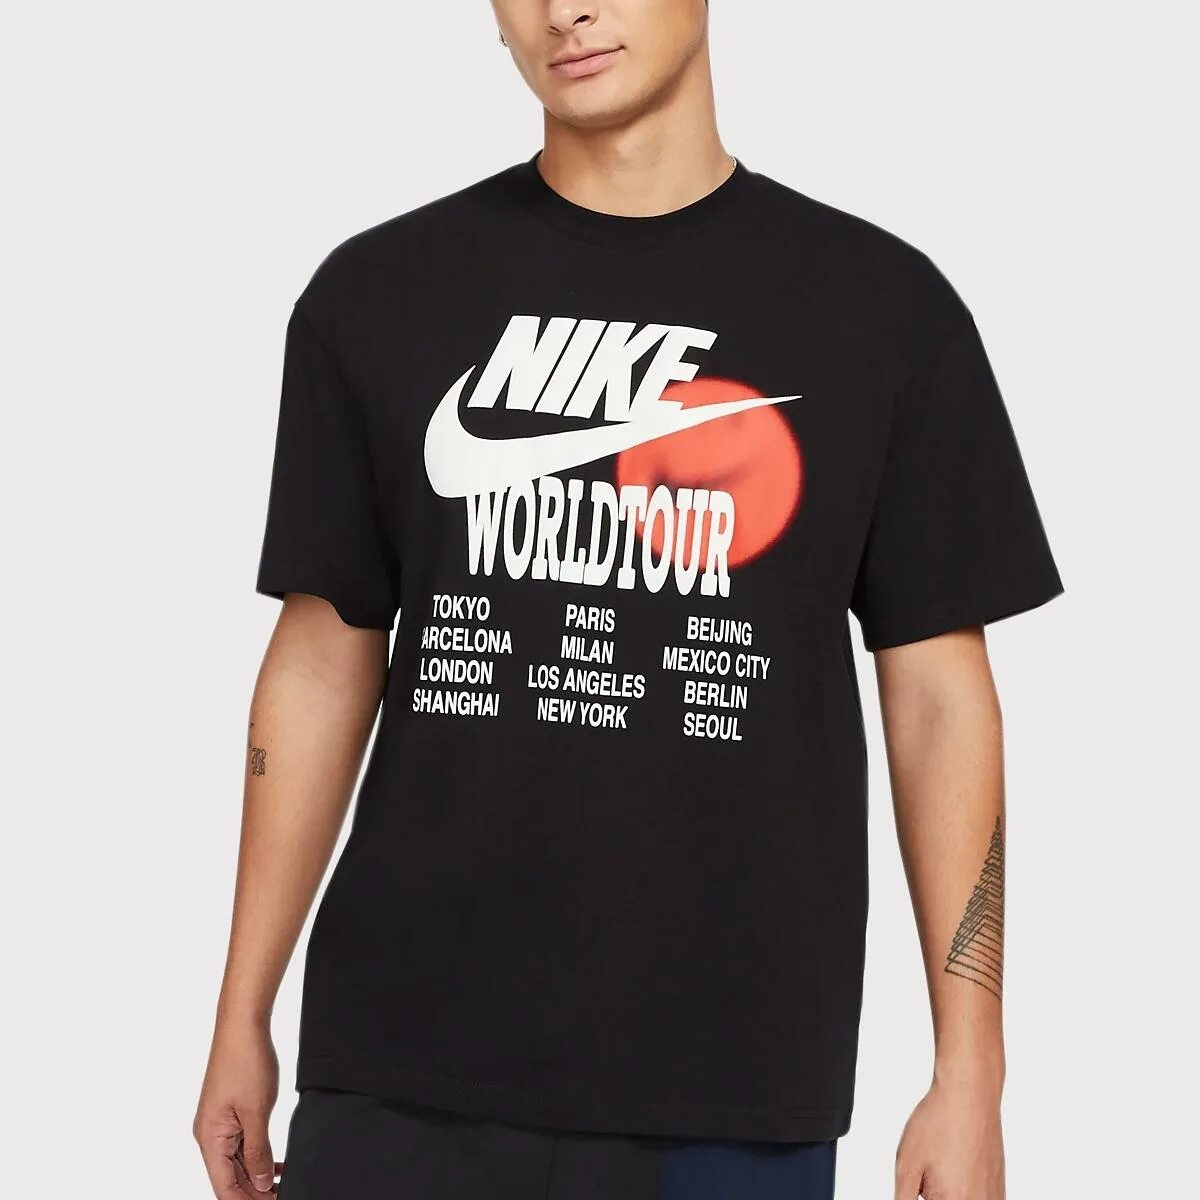 Ss world tour купить. Hoodie Nike World Tour Black. Nike World Tour t Shirt. Найк World Tour футболка. Футболка Nike NSW Tee World Tour.